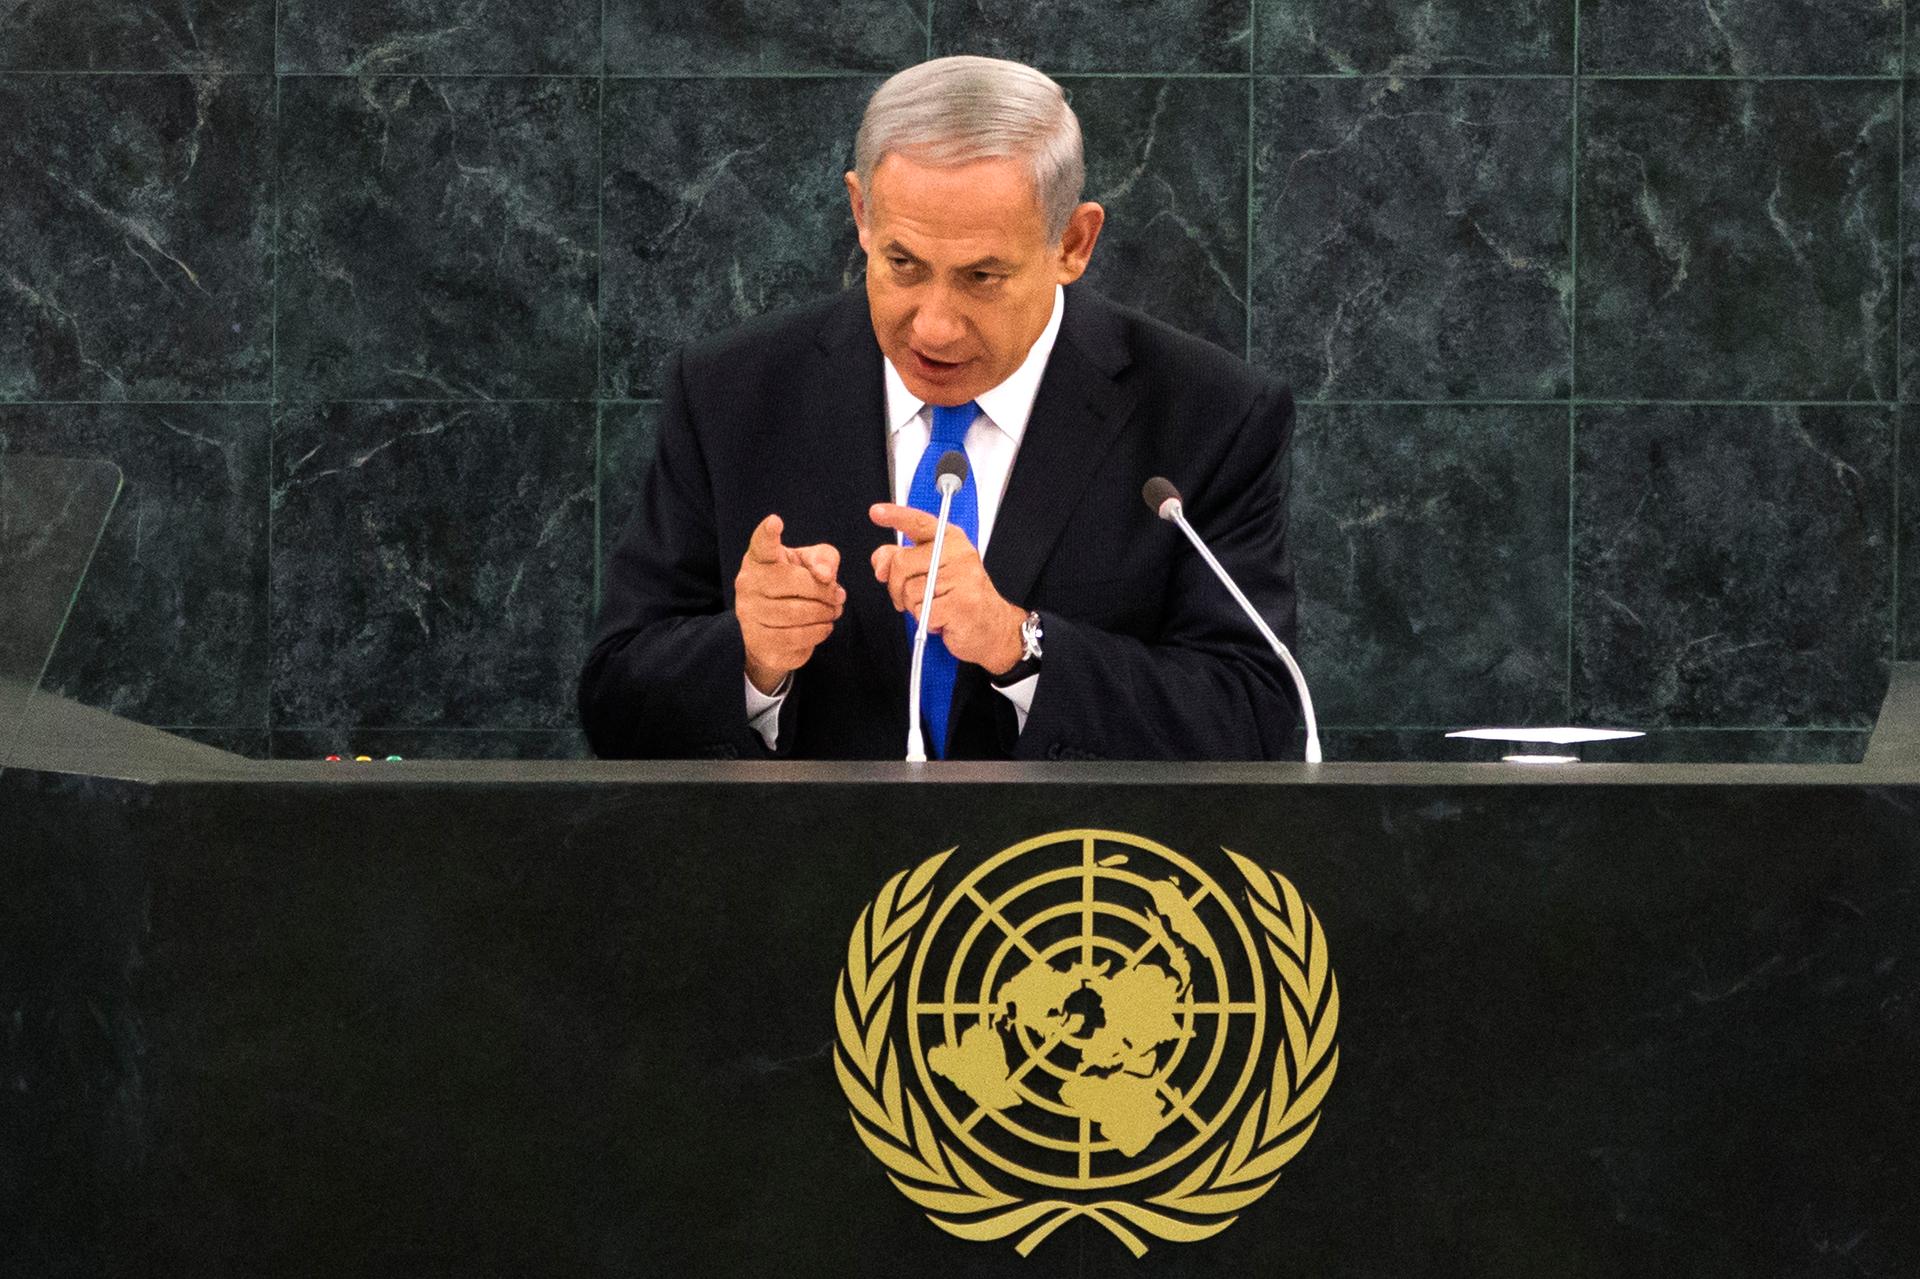 Israel's Benjamin Netanyahu at the United Nations in New York. (Photo: REUTERS/Adrees Latif)